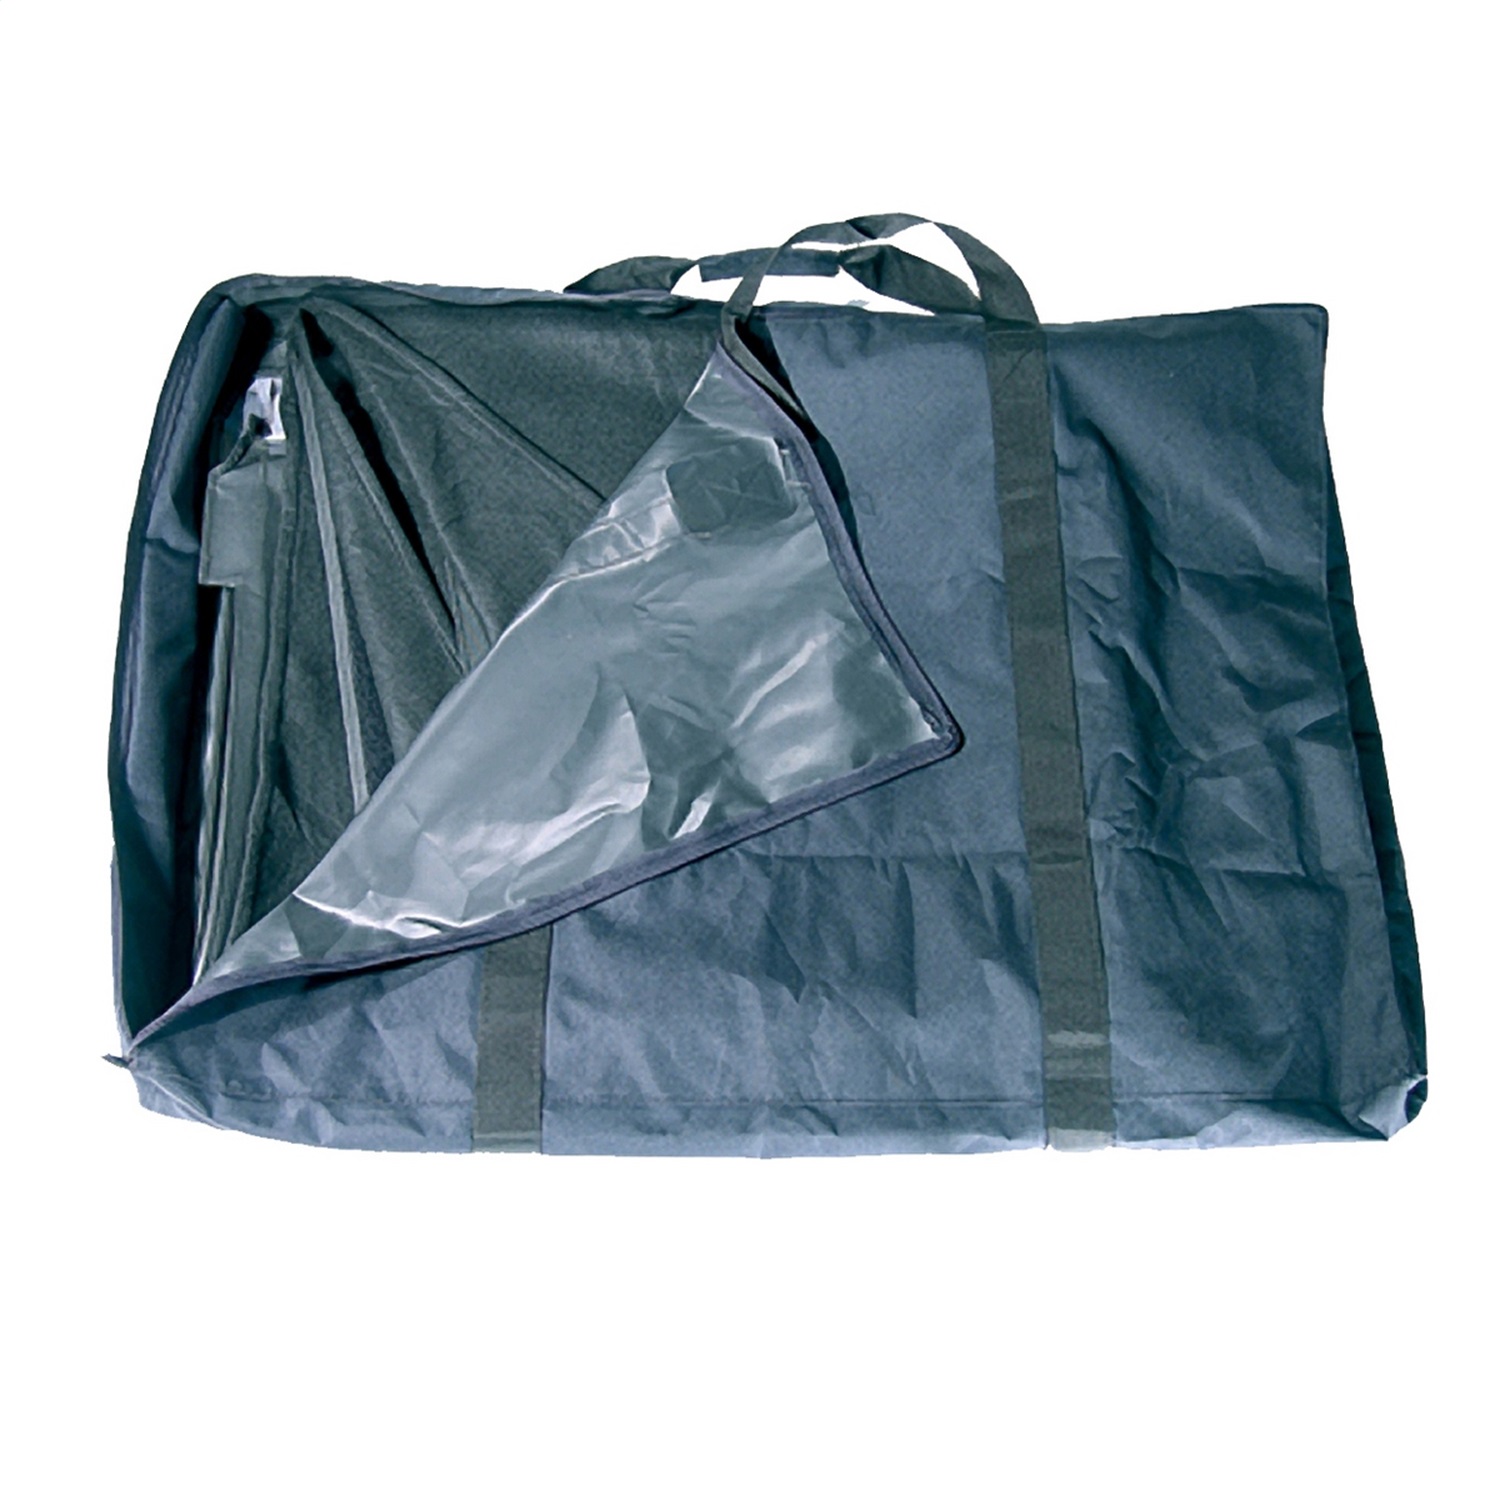 Rugged Ridge 12106.01 Soft Top Storage Bag